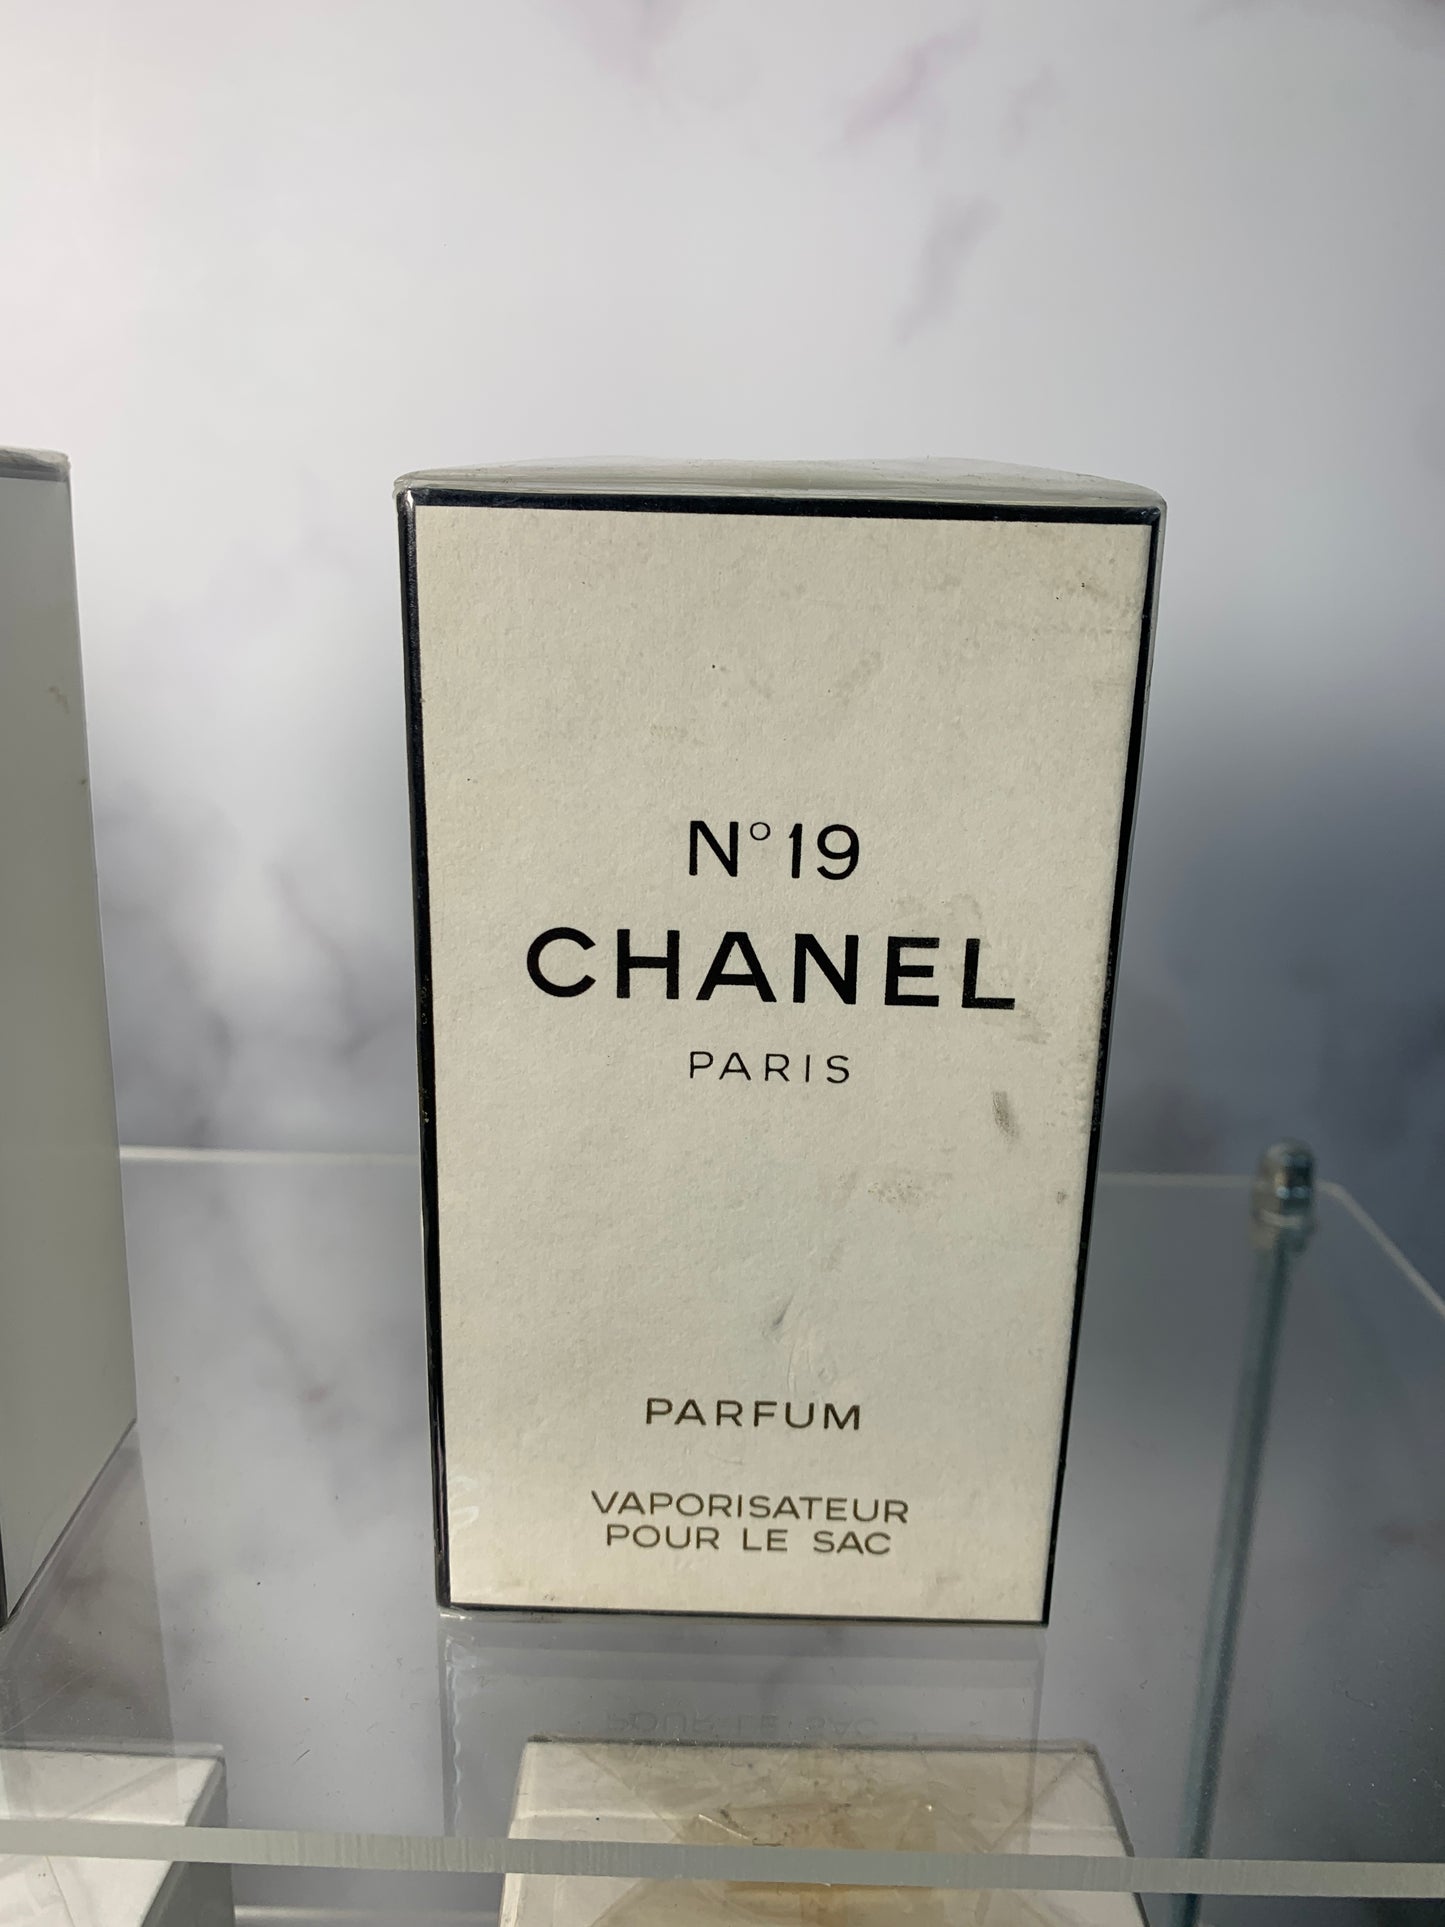 Rare Sealed Chanel no. 19 7.5ml 1/4 oz parfum perfume - 250325 A